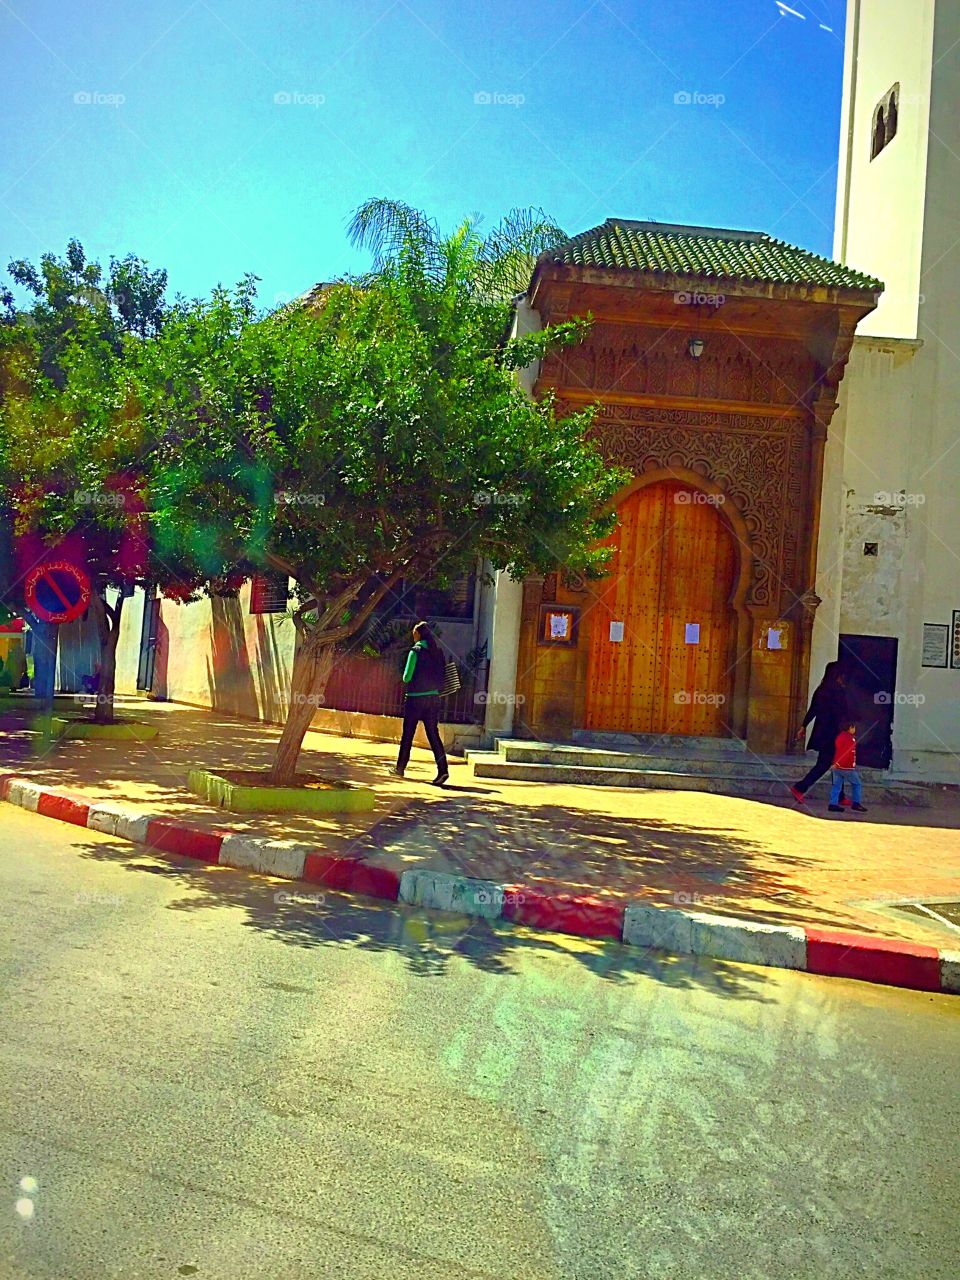 Kénitra, Morocco 🇲🇦 